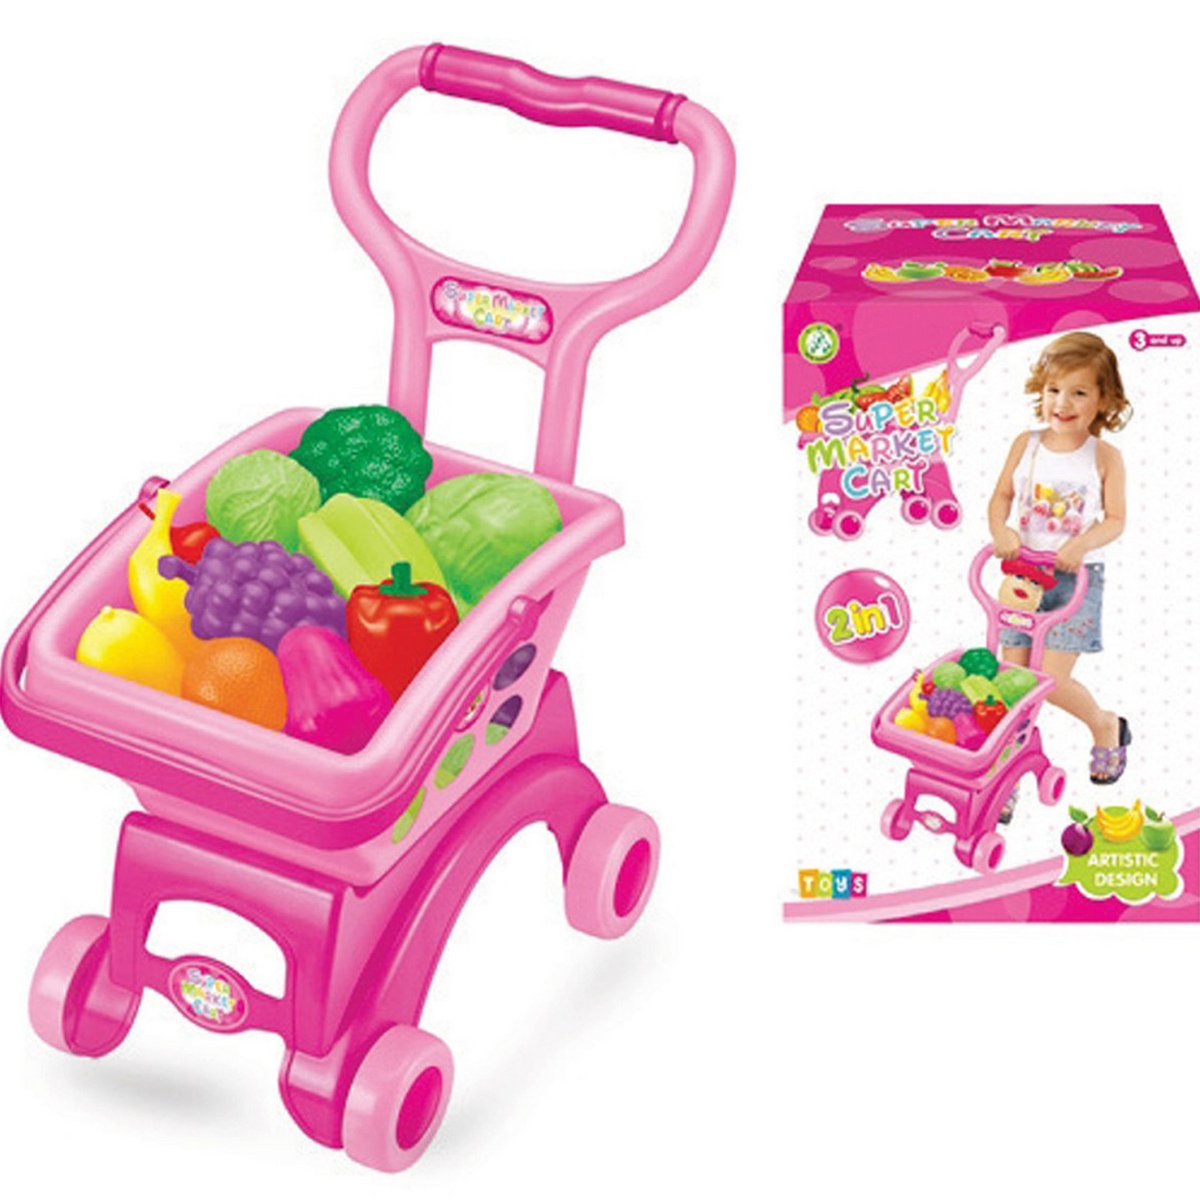 Fabiola Mini Shopping Cart Set NF595-18